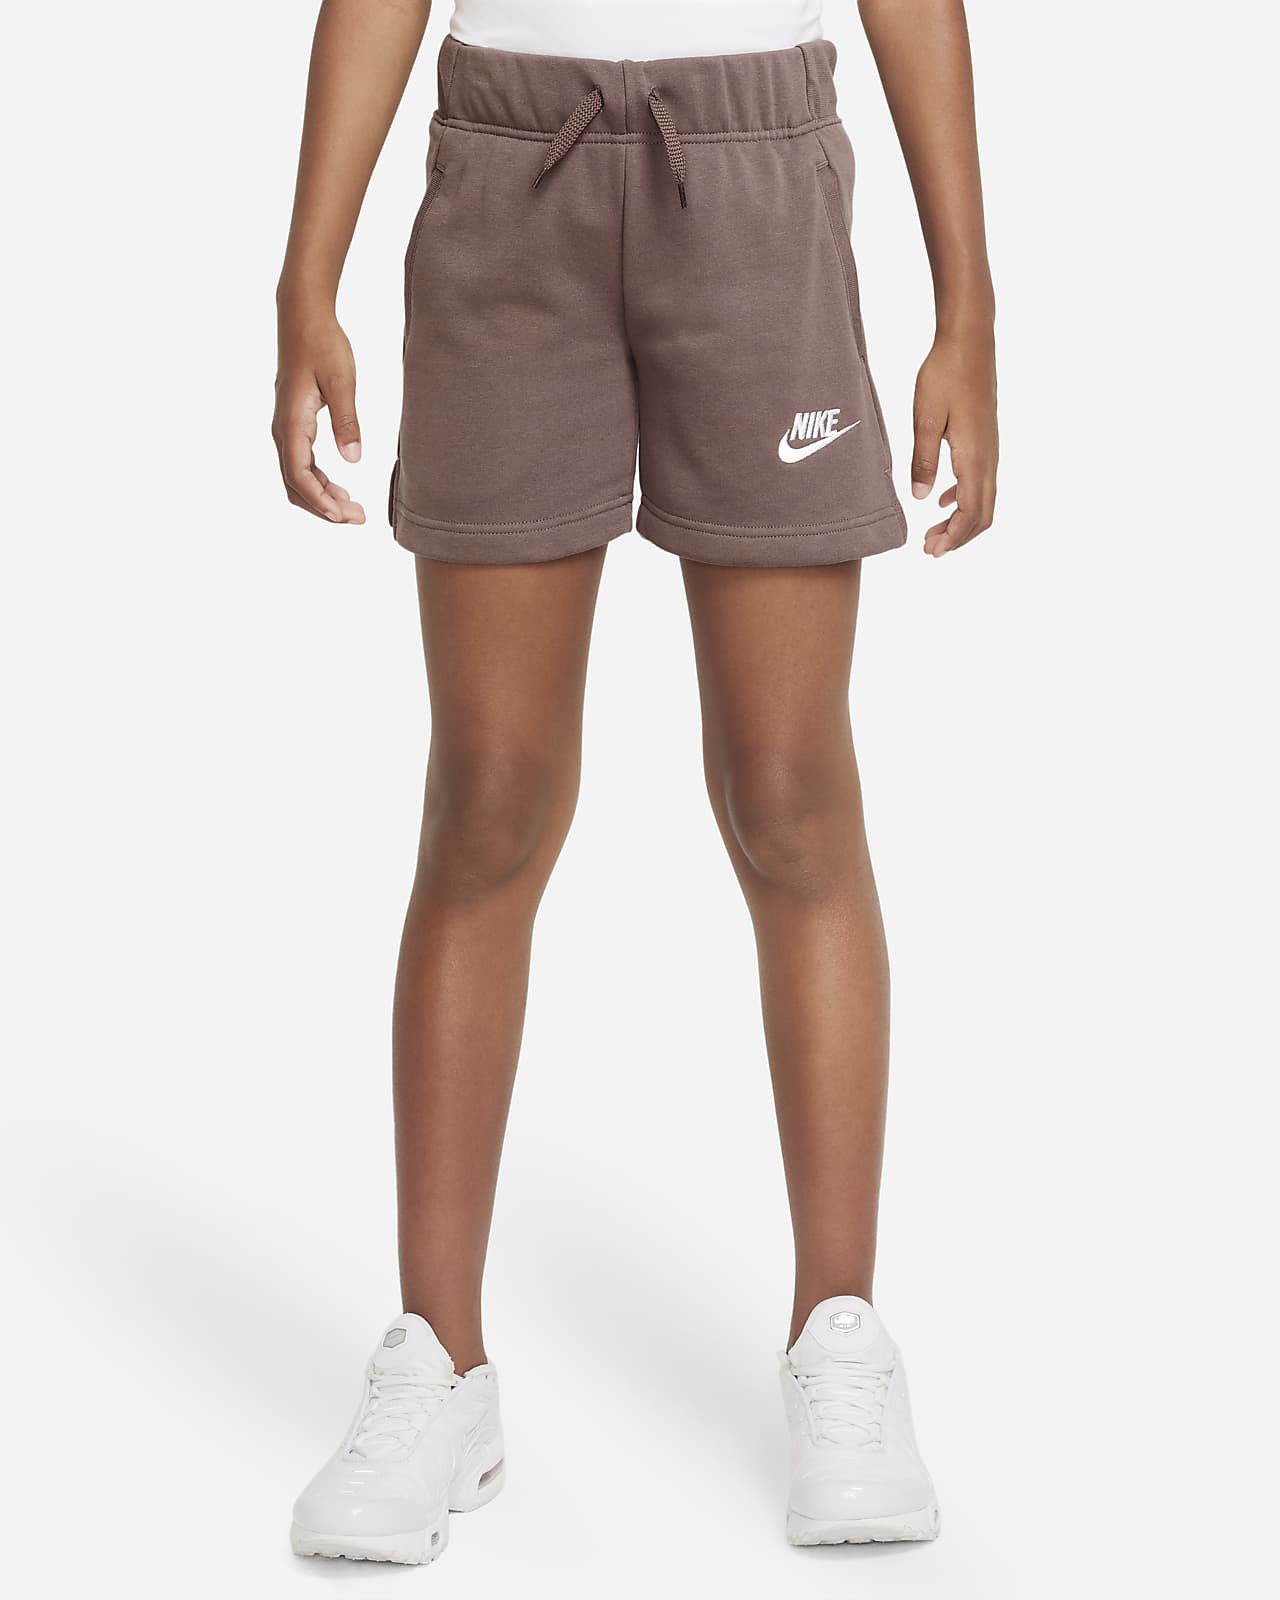 Shorts de French Terry para niña talla grande Nike Sportswear Club